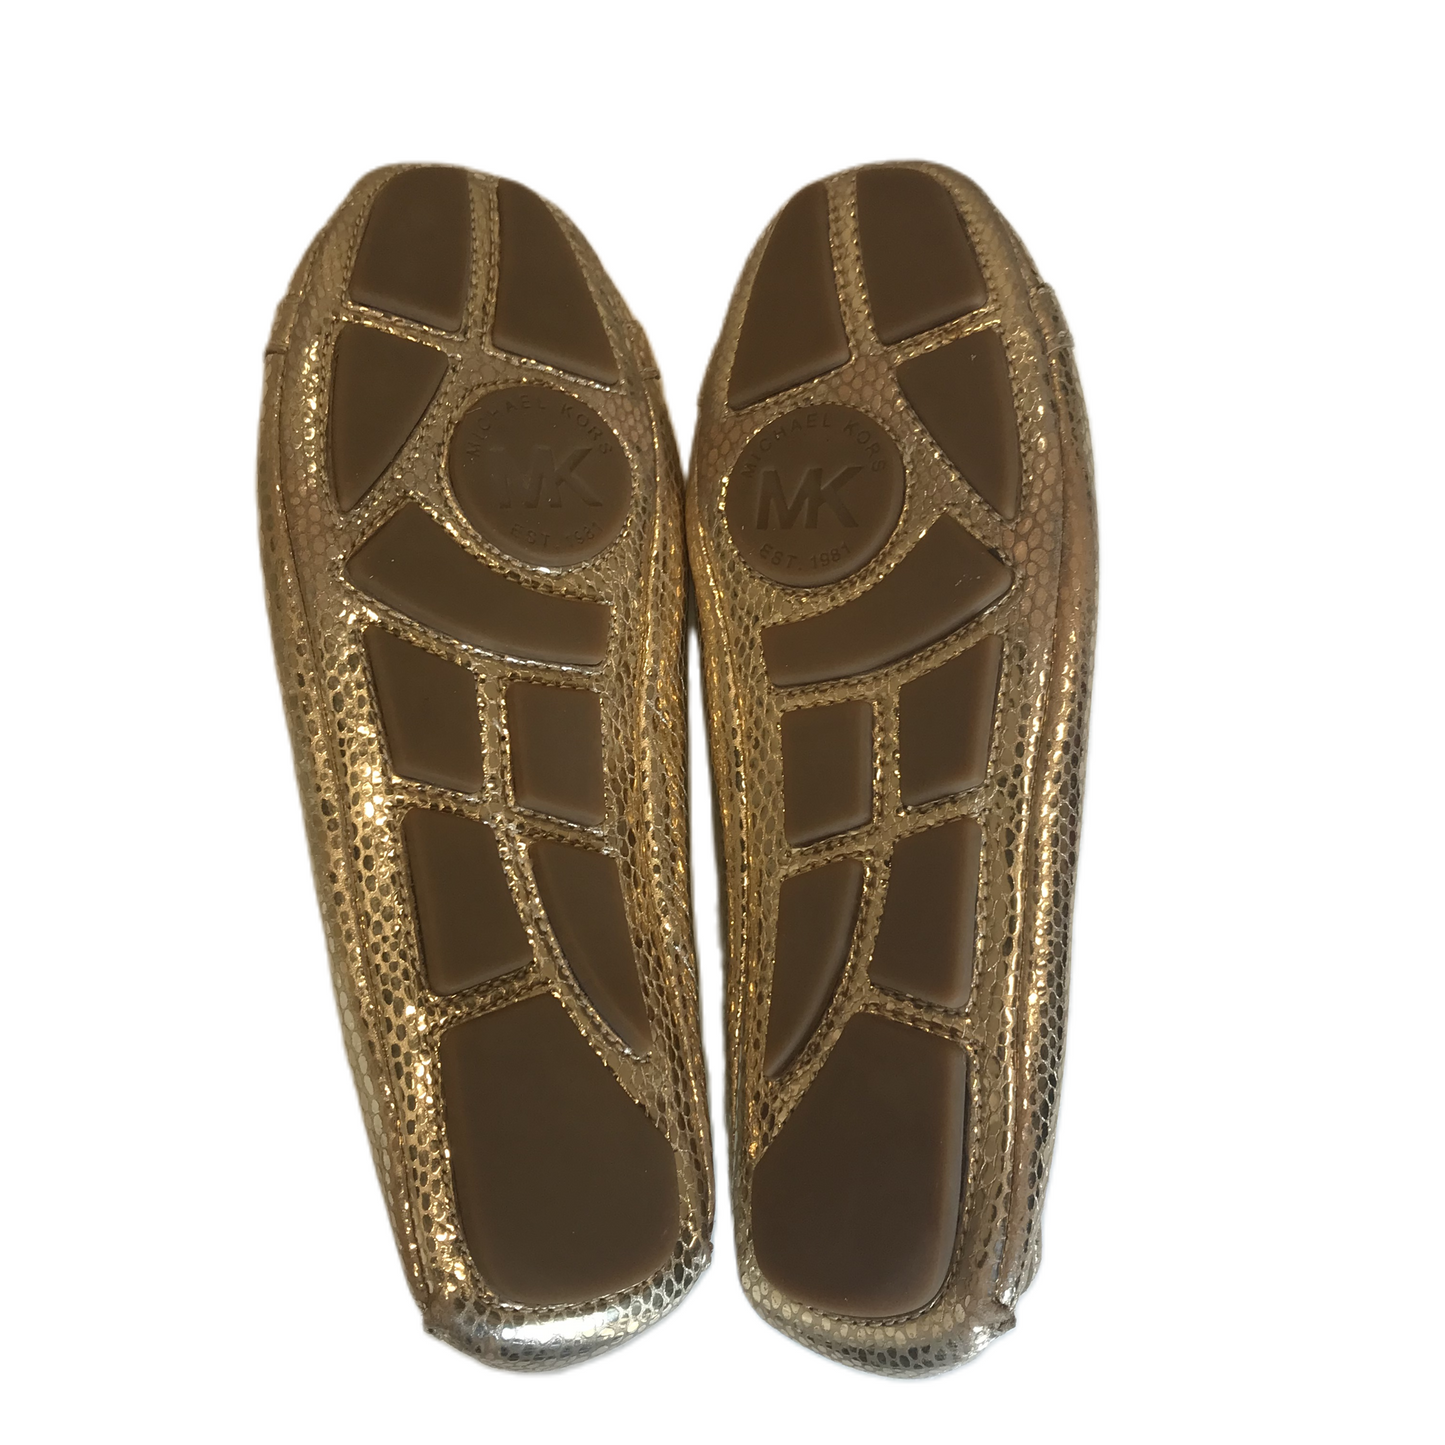 Gold Shoes Designer By Michael Kors, Size: 8